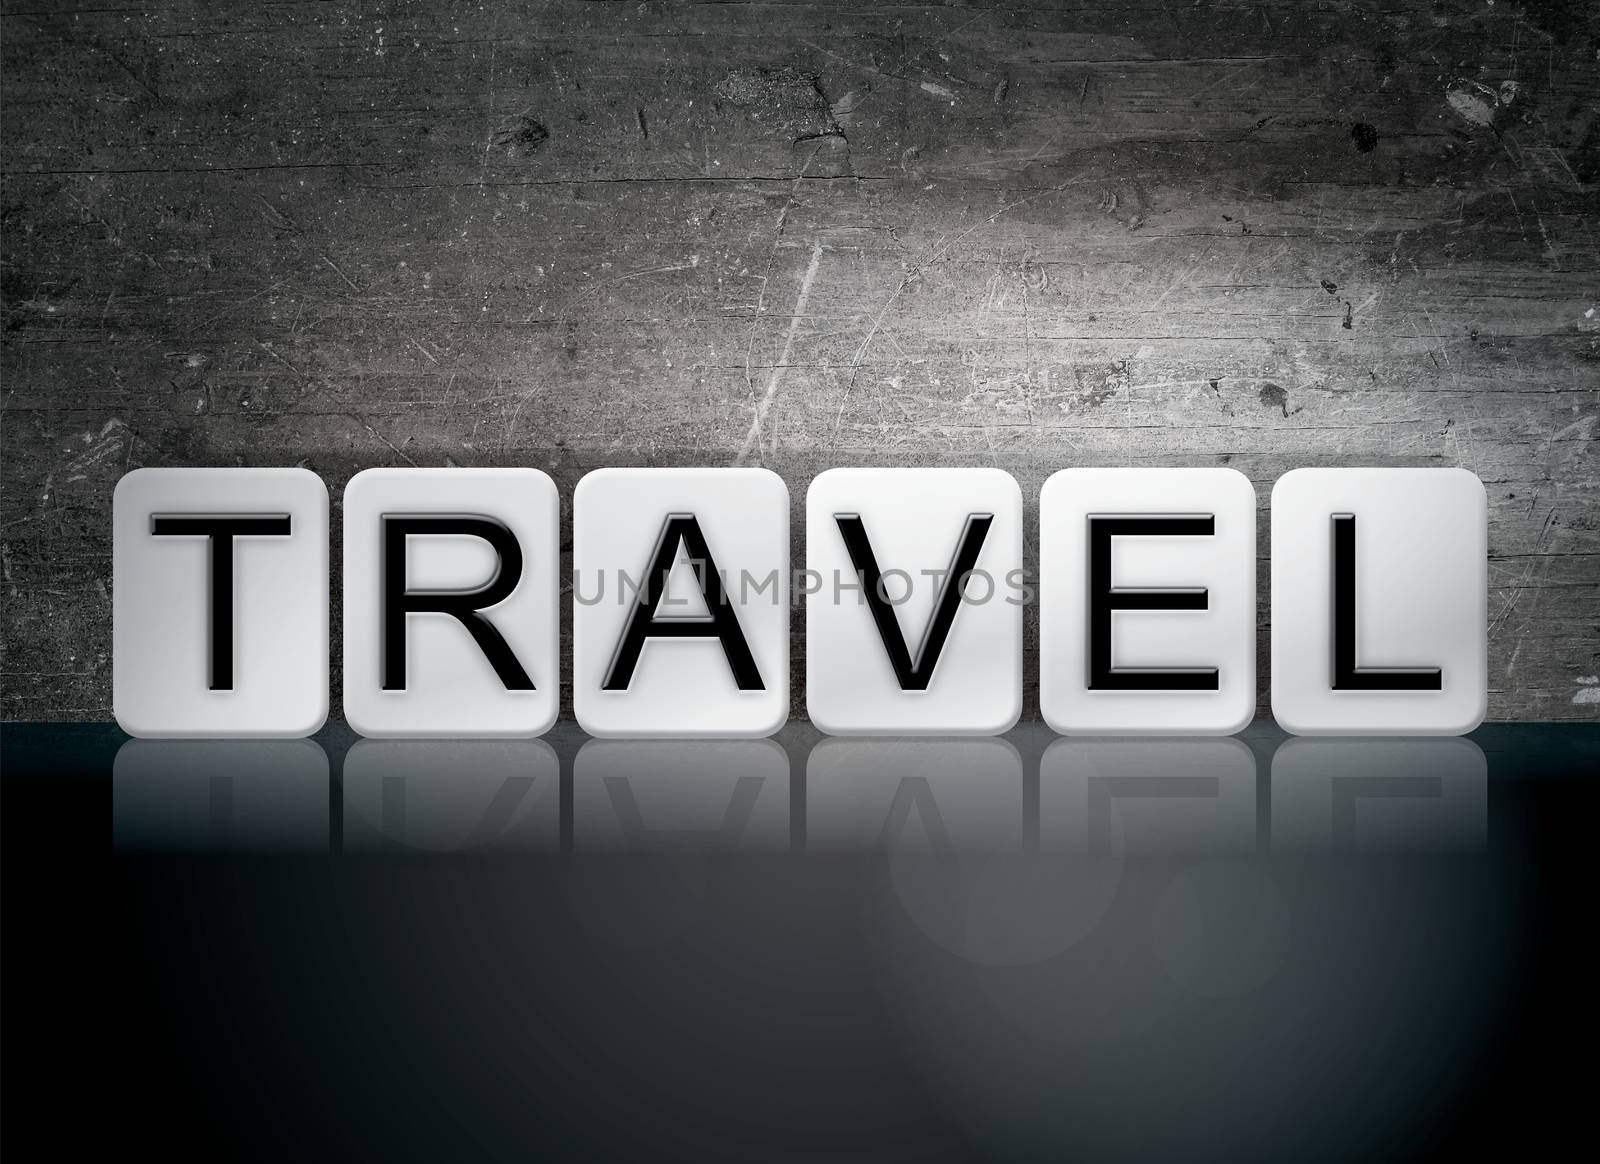 The word "Travel" written in white tiles against a dark vintage grunge background.